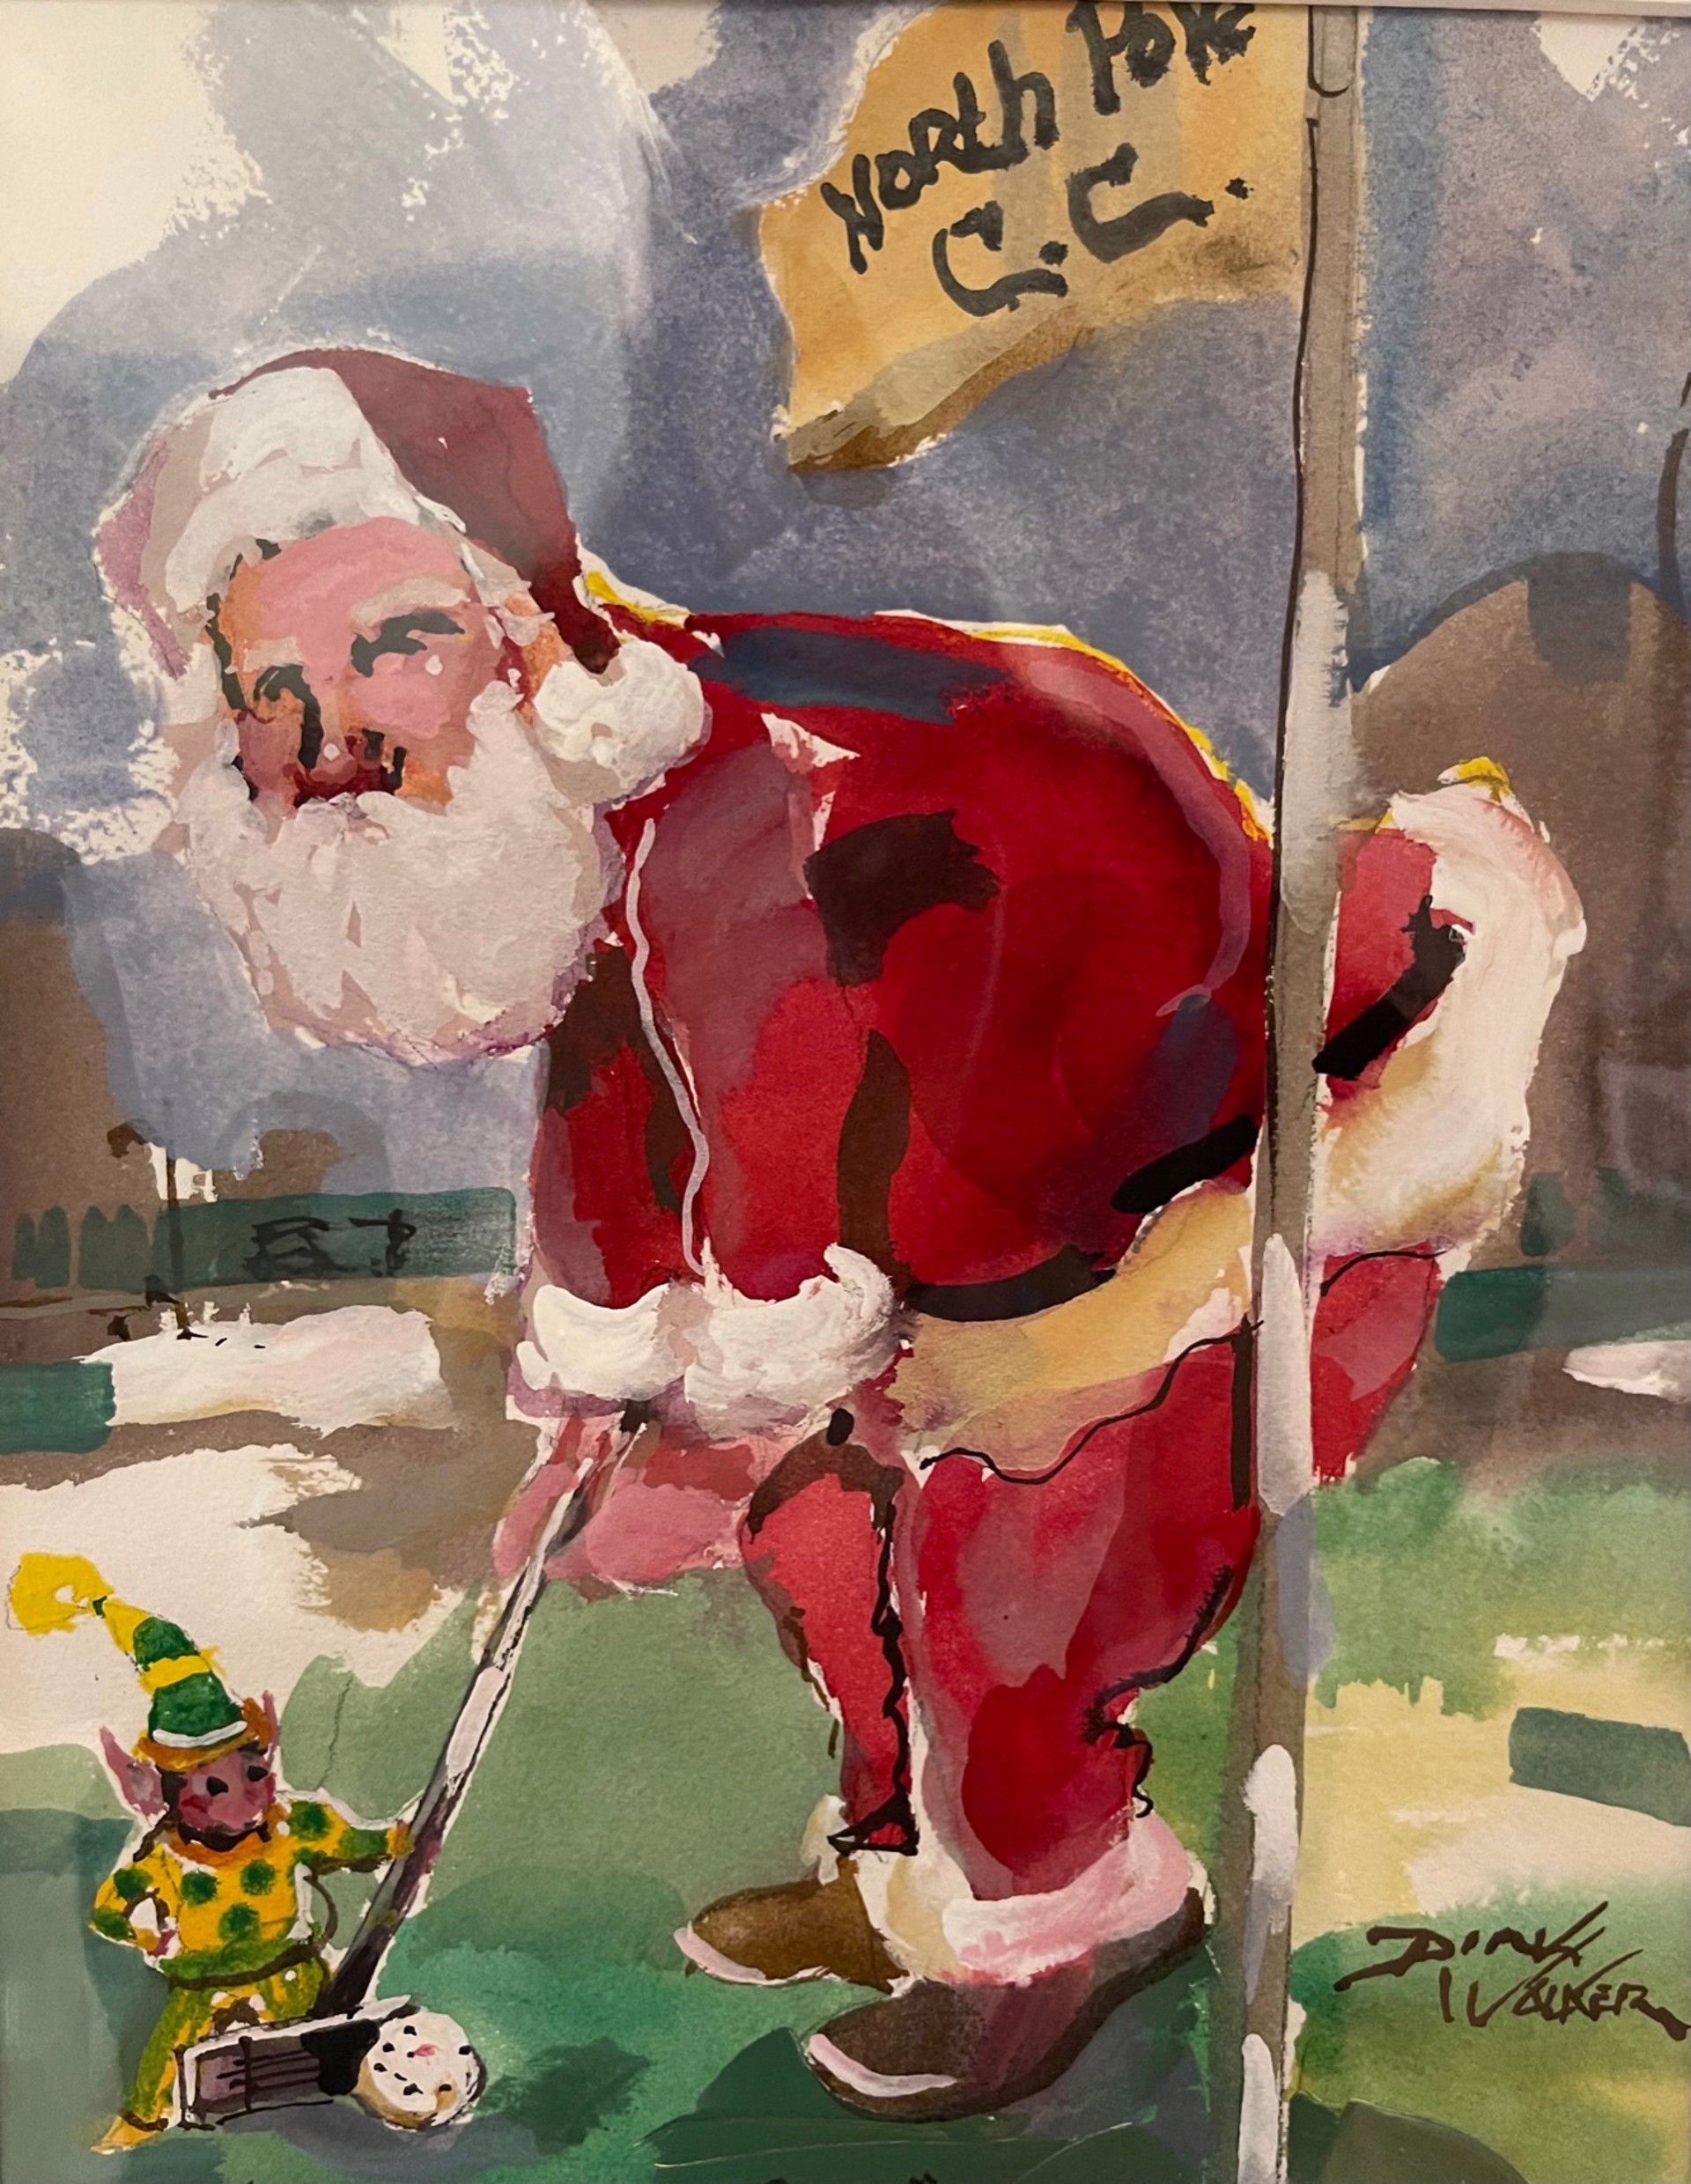 North Pole Country Club -Santa by Dirk Walker